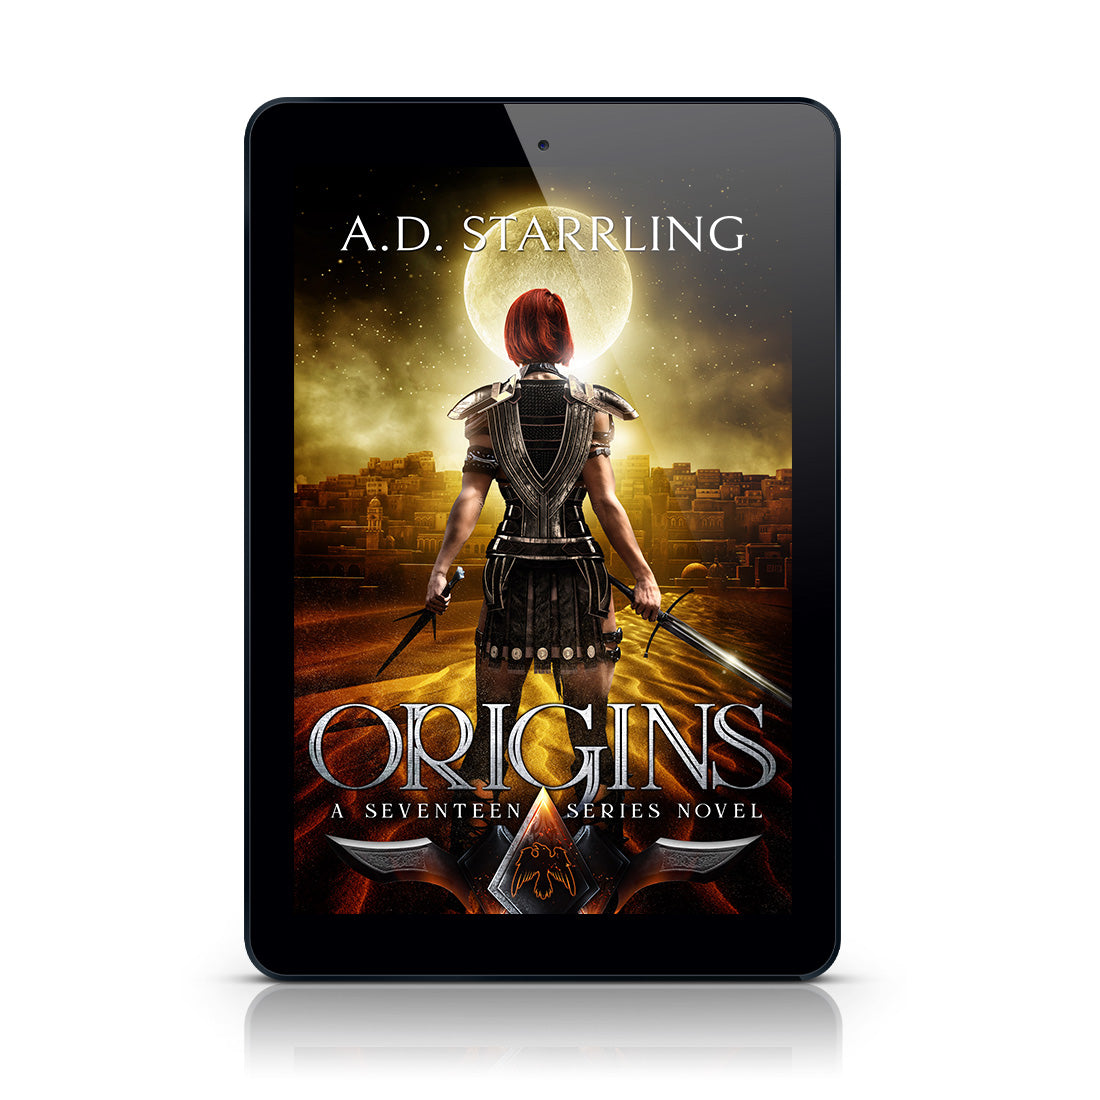 Origins (Seventeen Series Book 5) EBOOK supernatural thriller urban fantasy author ad starrling